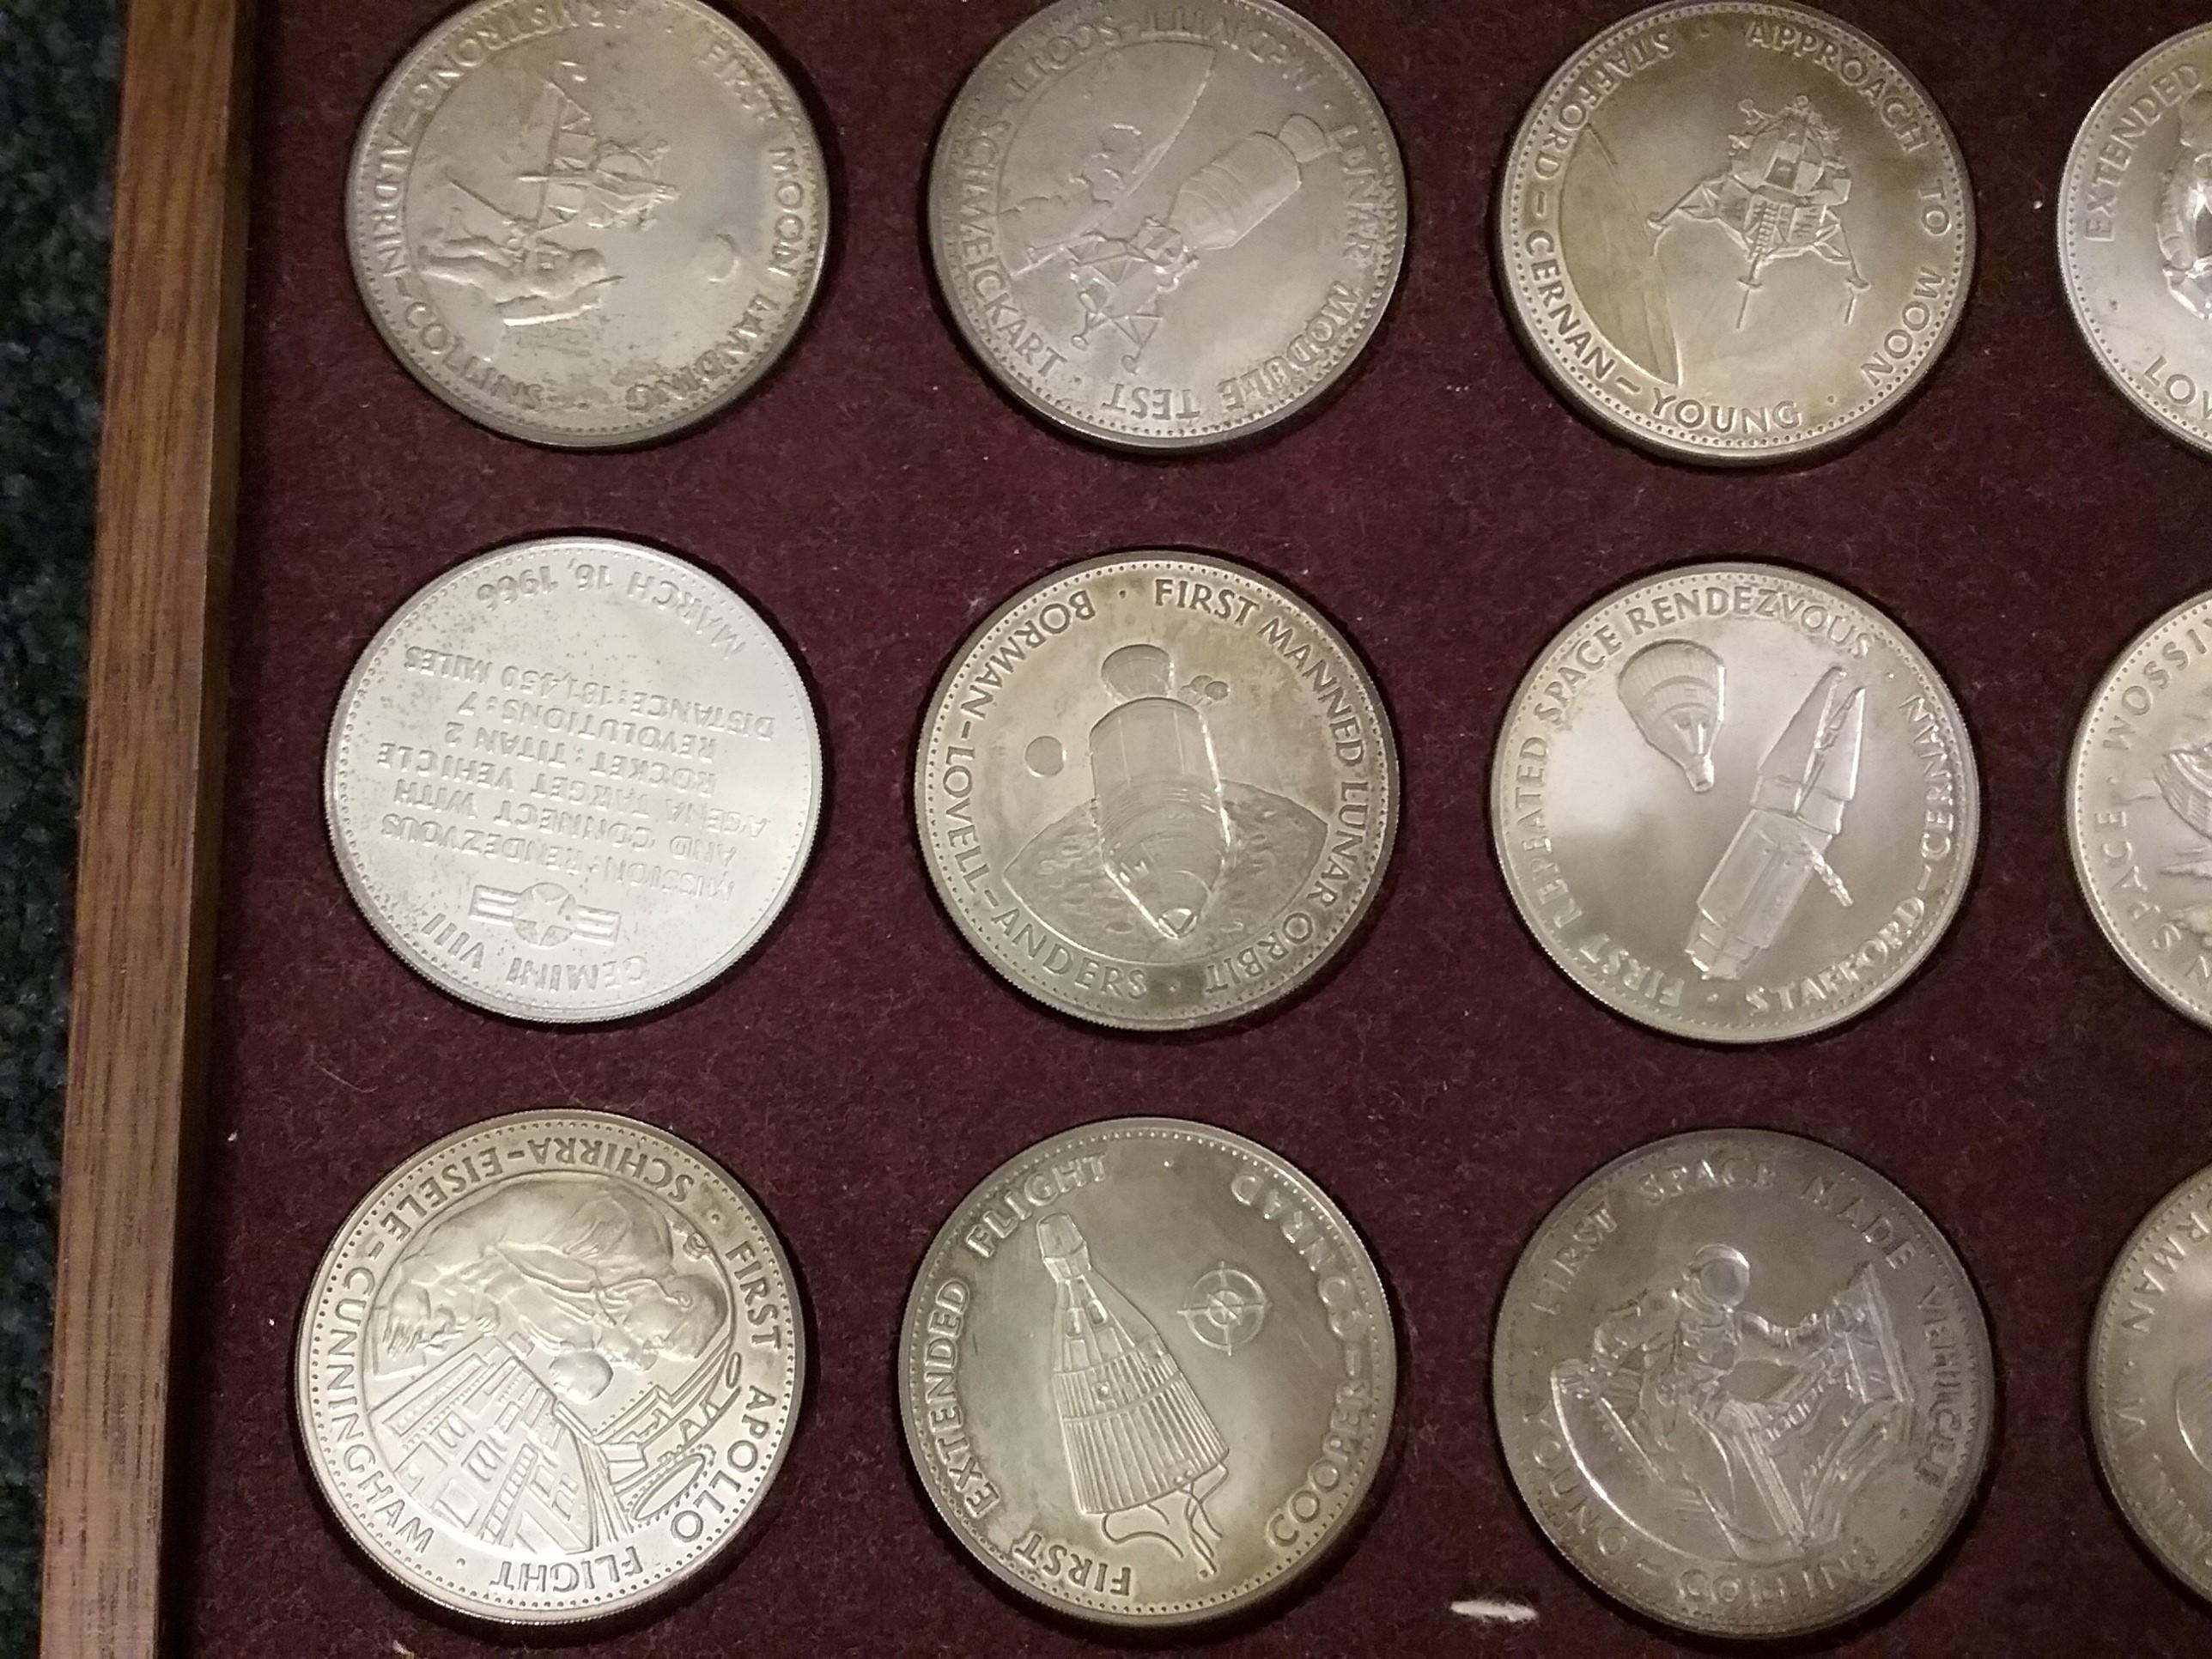 Danbury Mint Men in Space Series Silver Medals